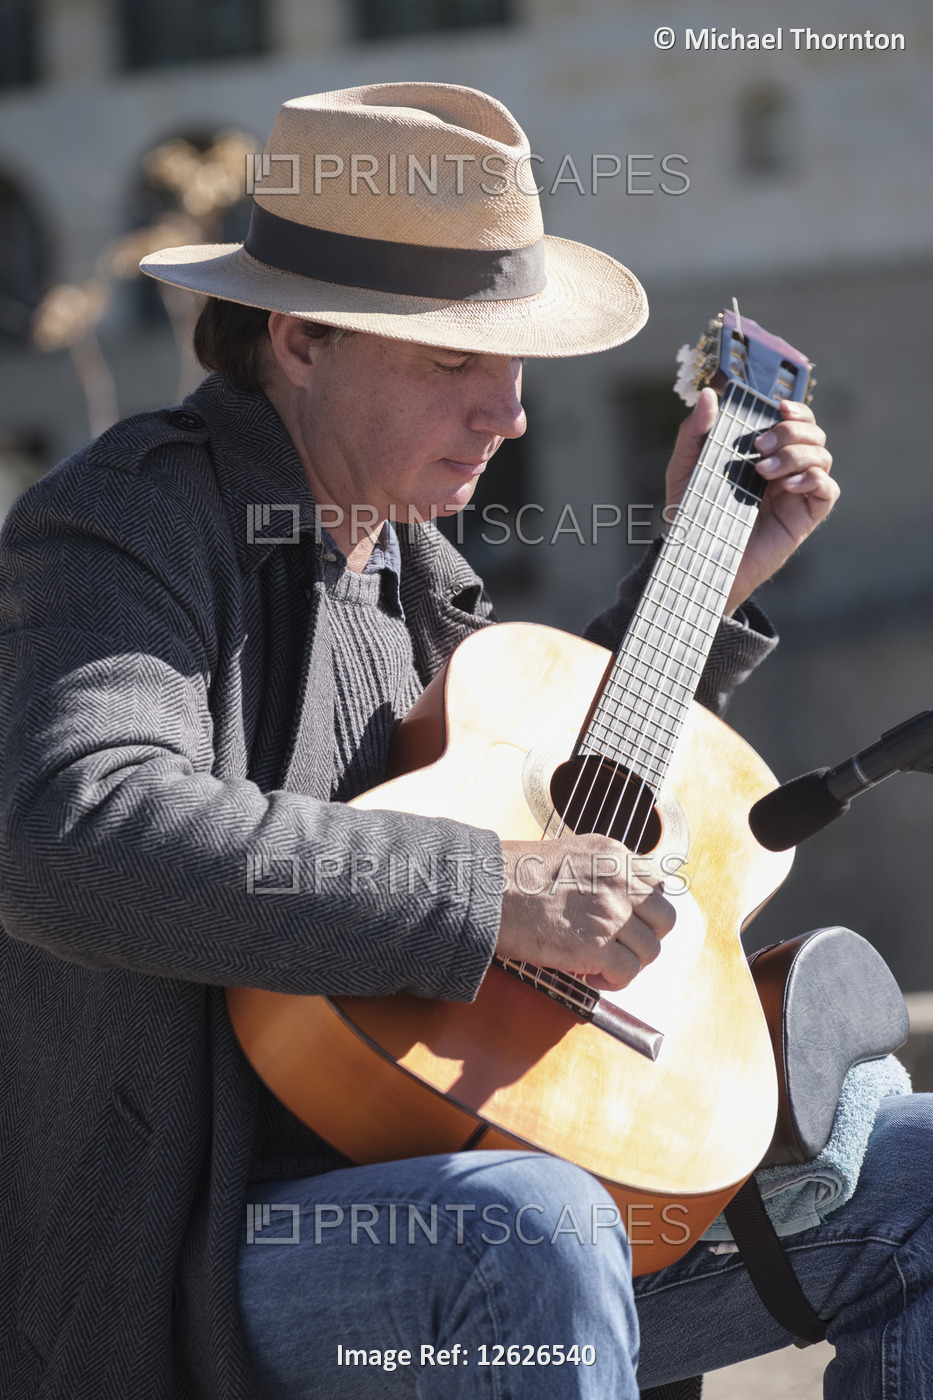 Buscar playing guitar, Ronda, Malaga, Spain